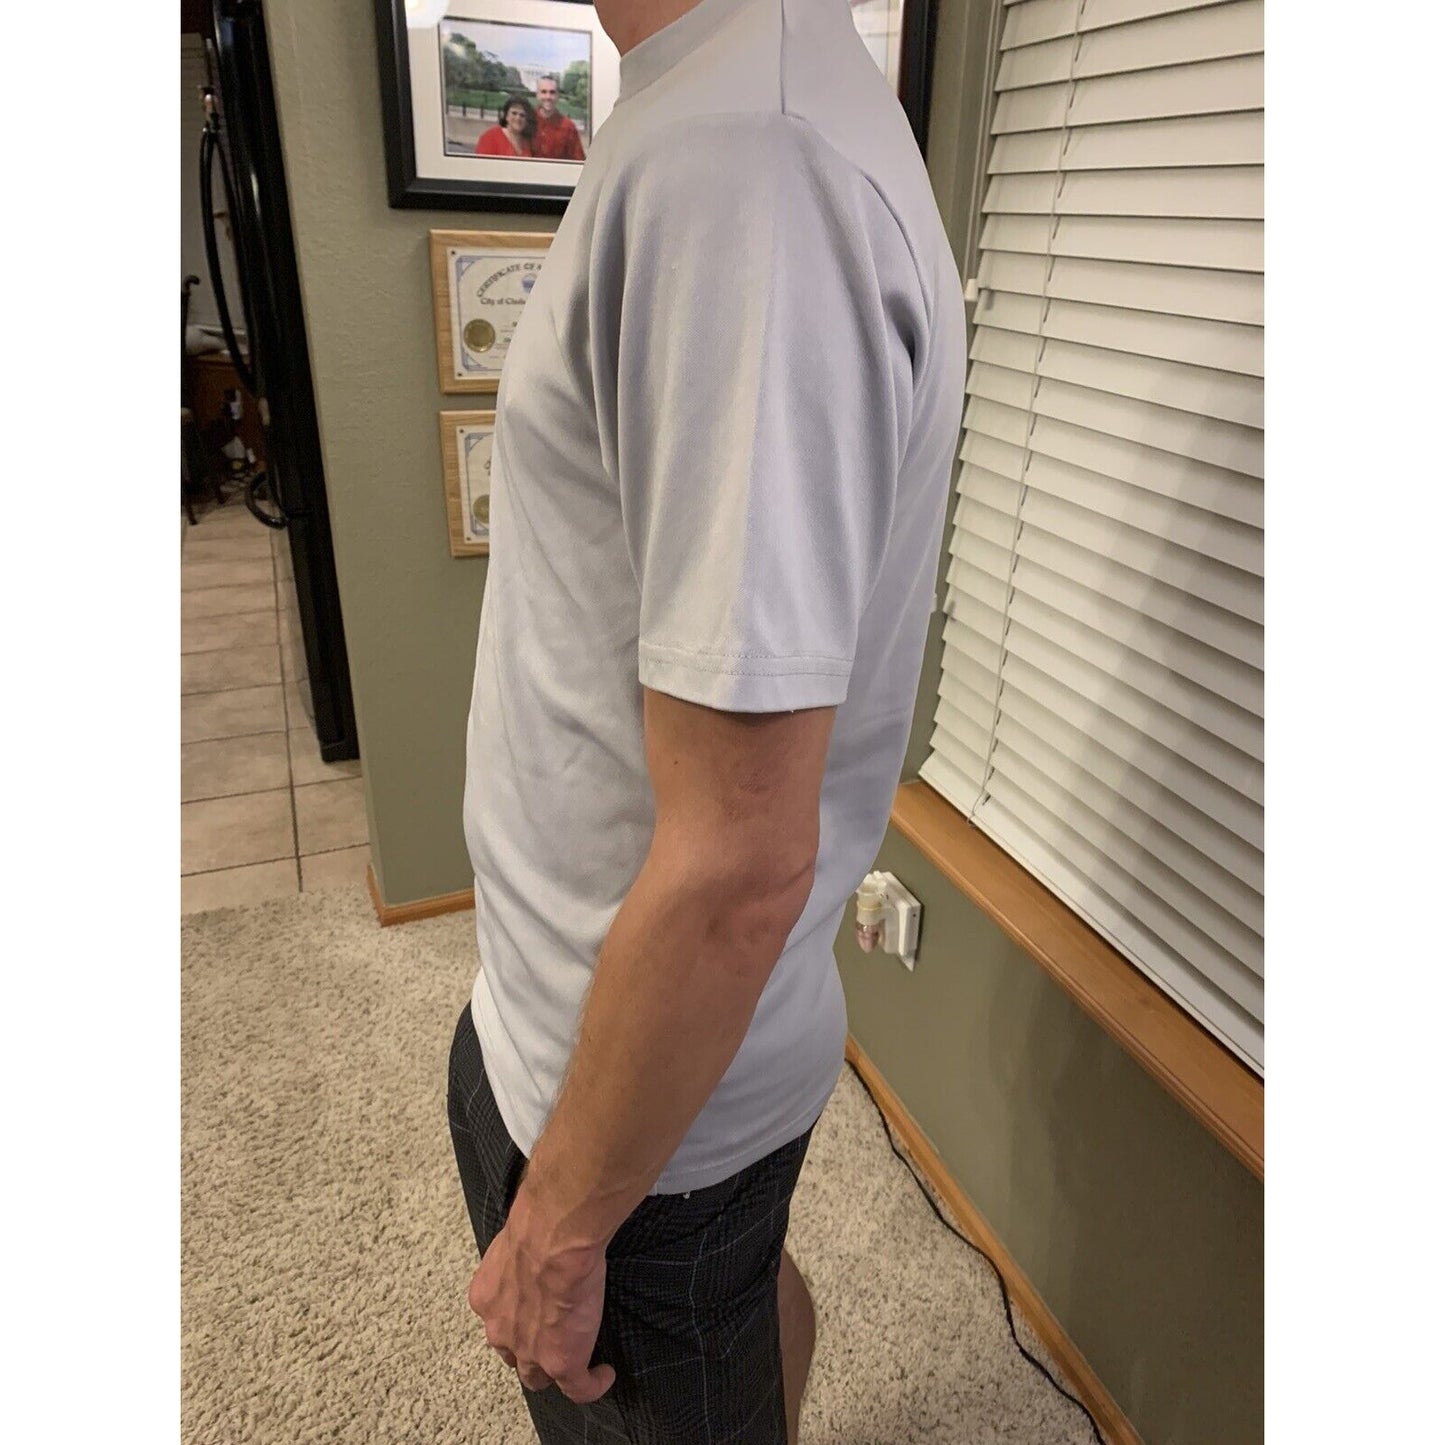 Augusta Men’s Sportswear Moisture Management Adult Small Gray Short Sleeve